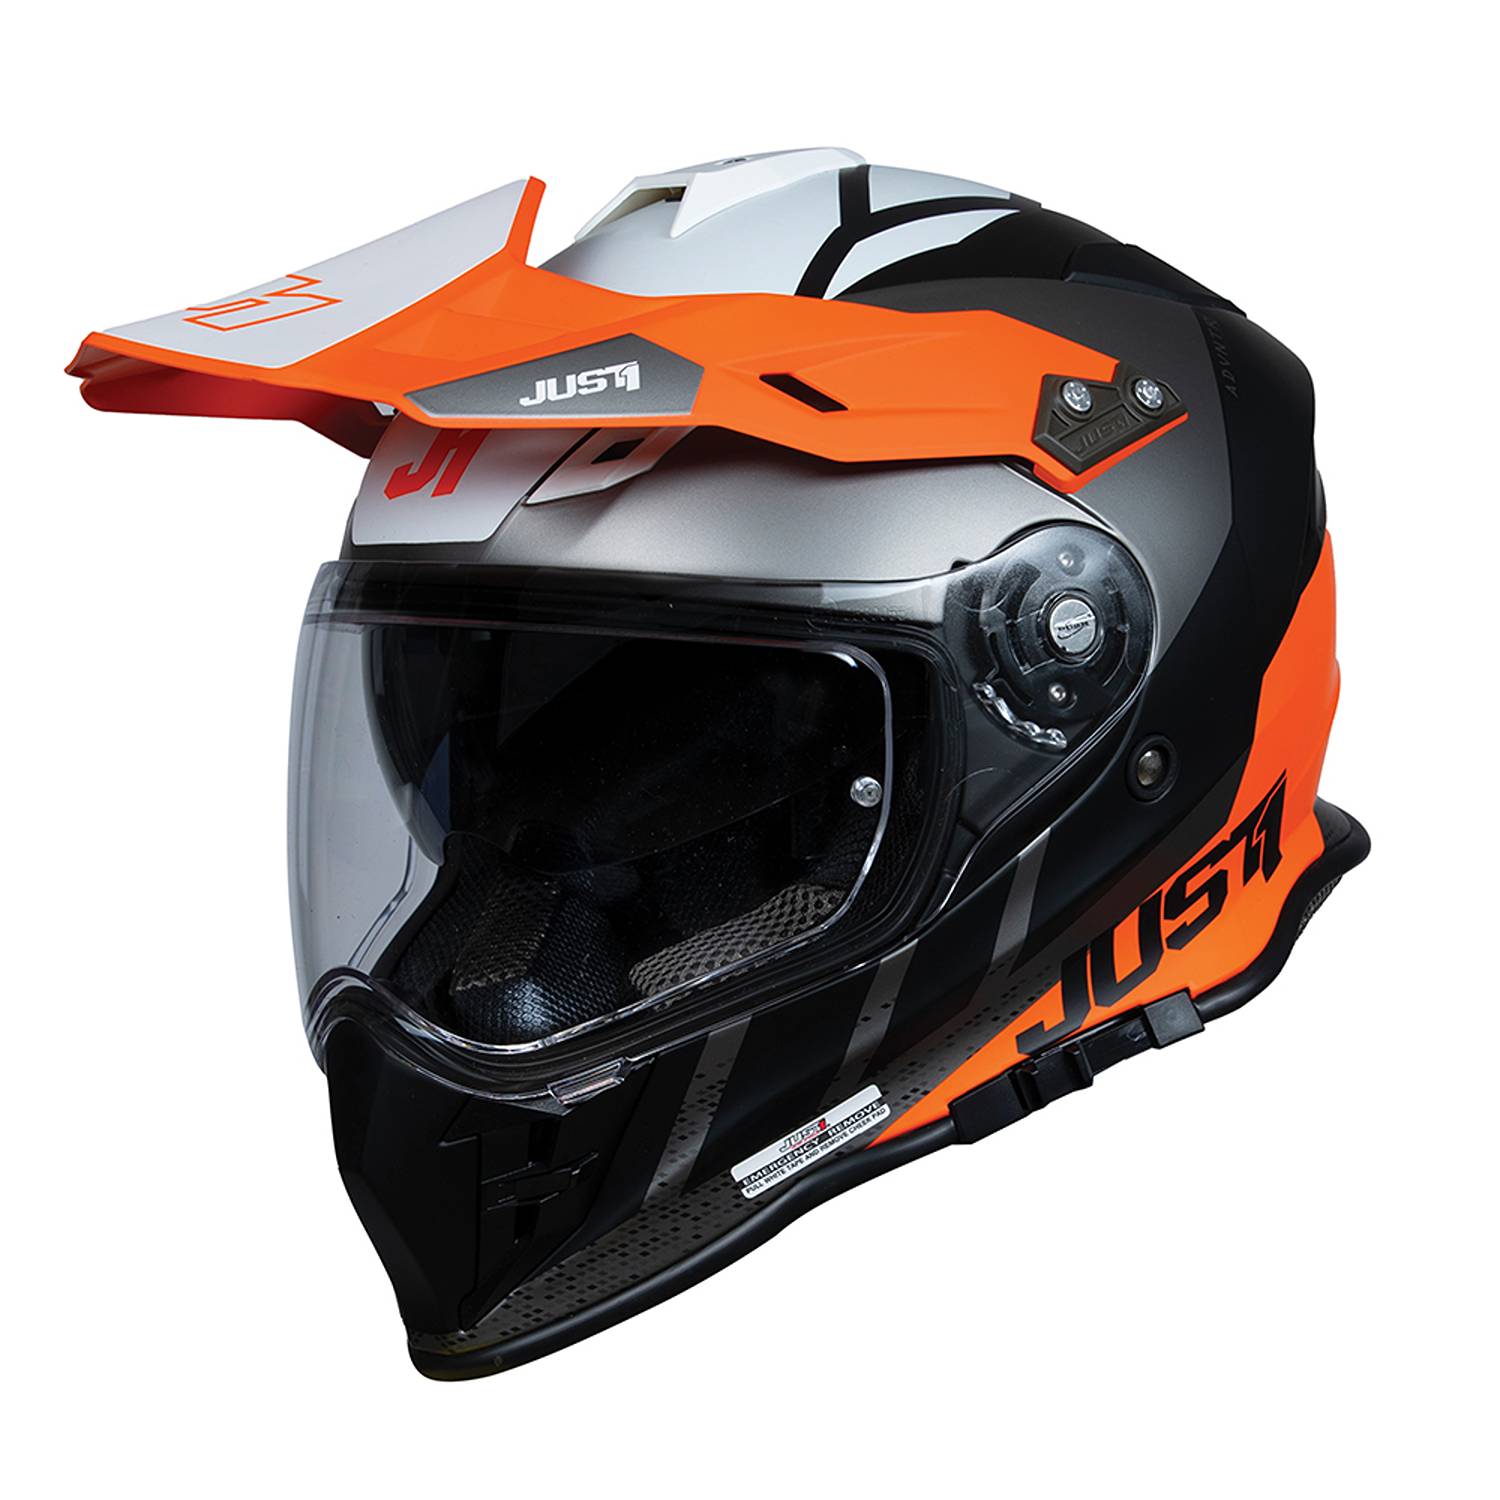 Just1 Helmet J34 Pro Outerspace Orange Titanium Matt Adventure Helmet Size S